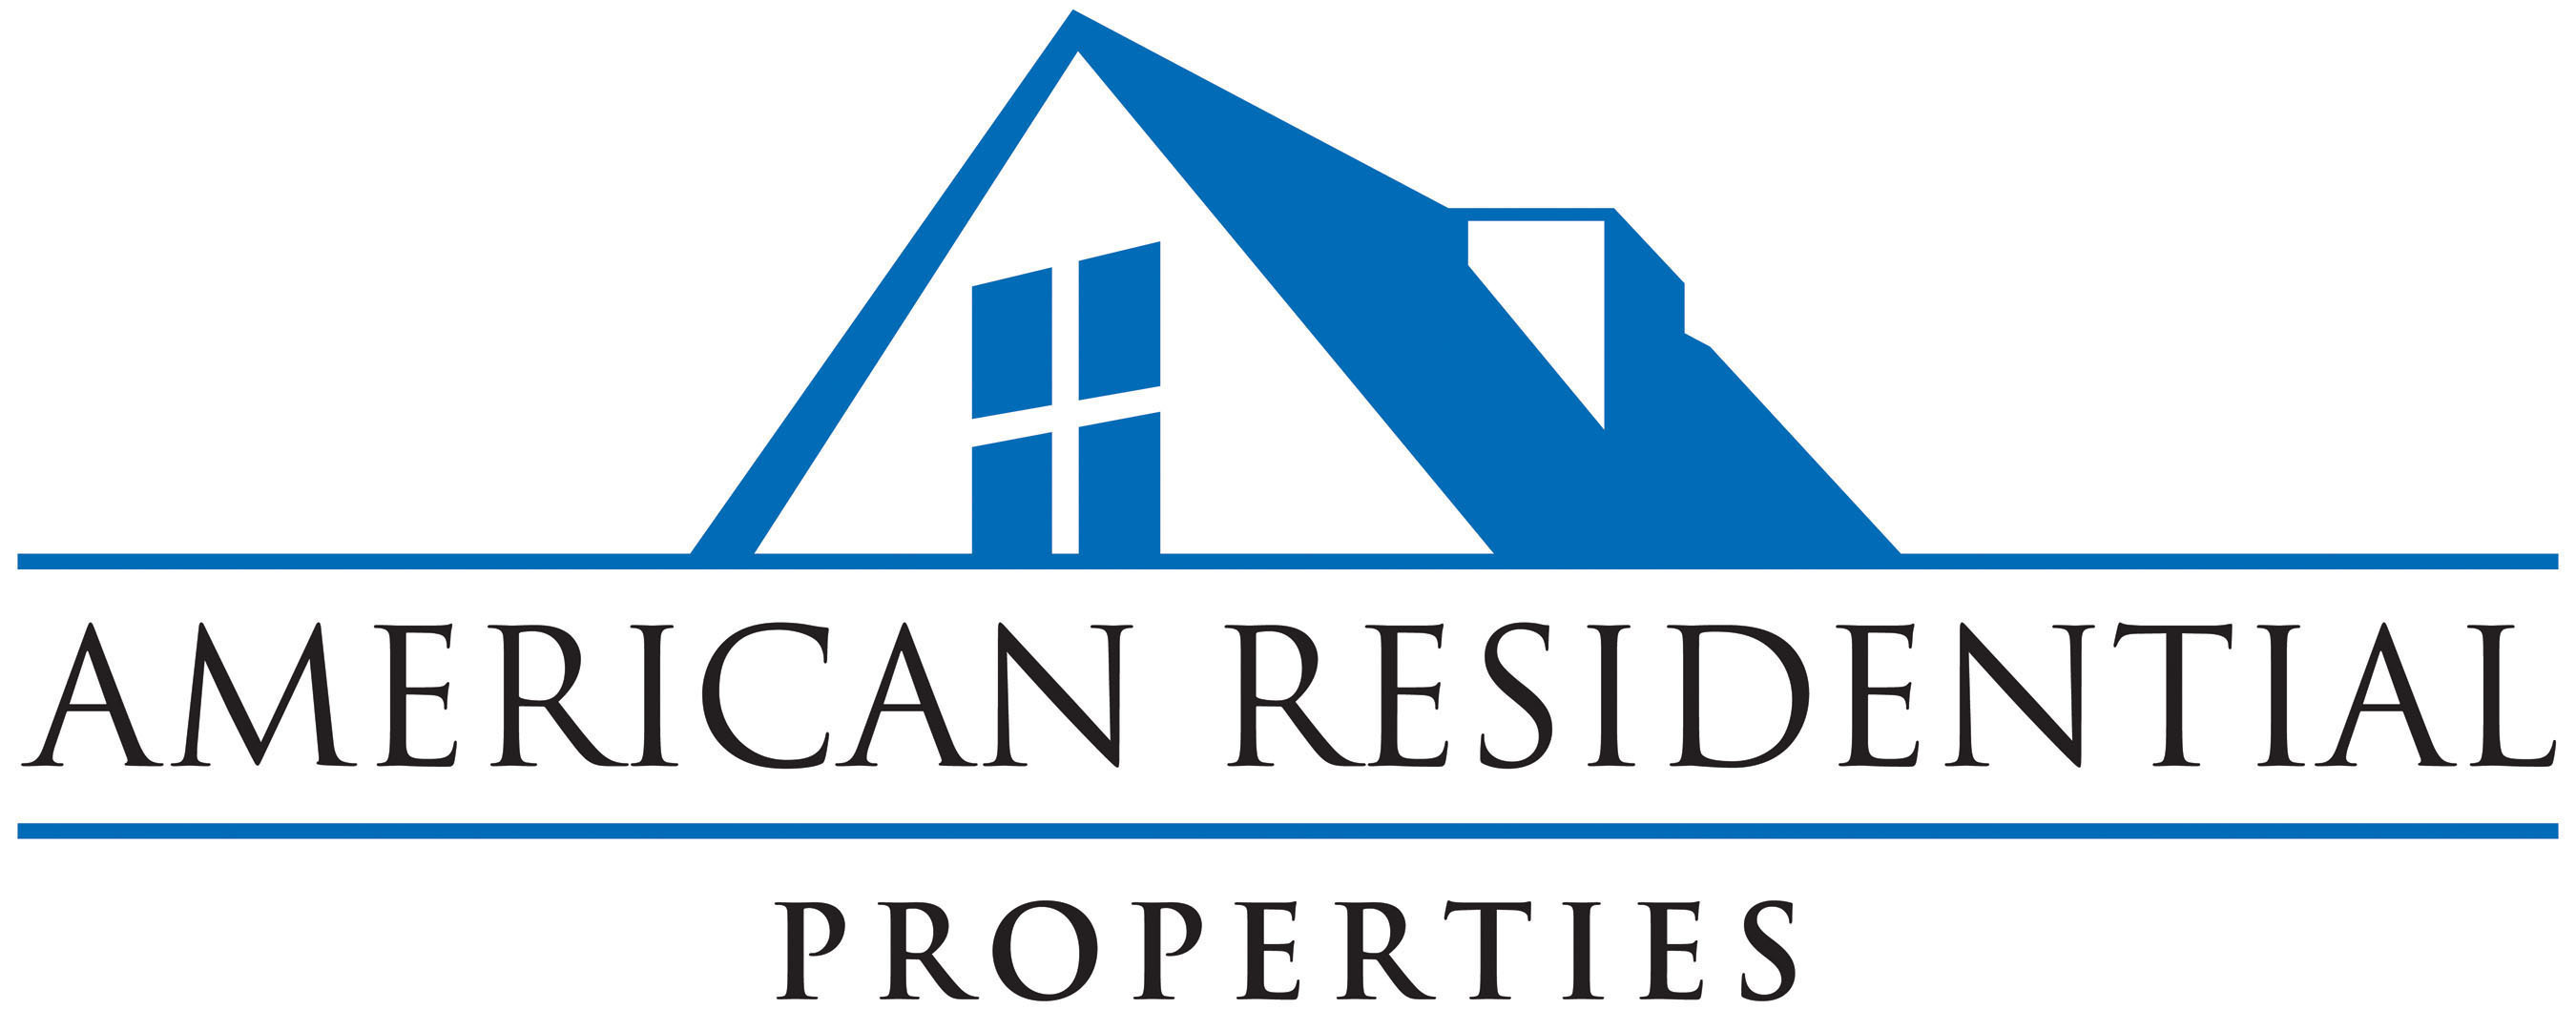 American Residential Properties, Inc. logo. (PRNewsFoto/American Residential Properties, Inc.) (PRNewsFoto/)